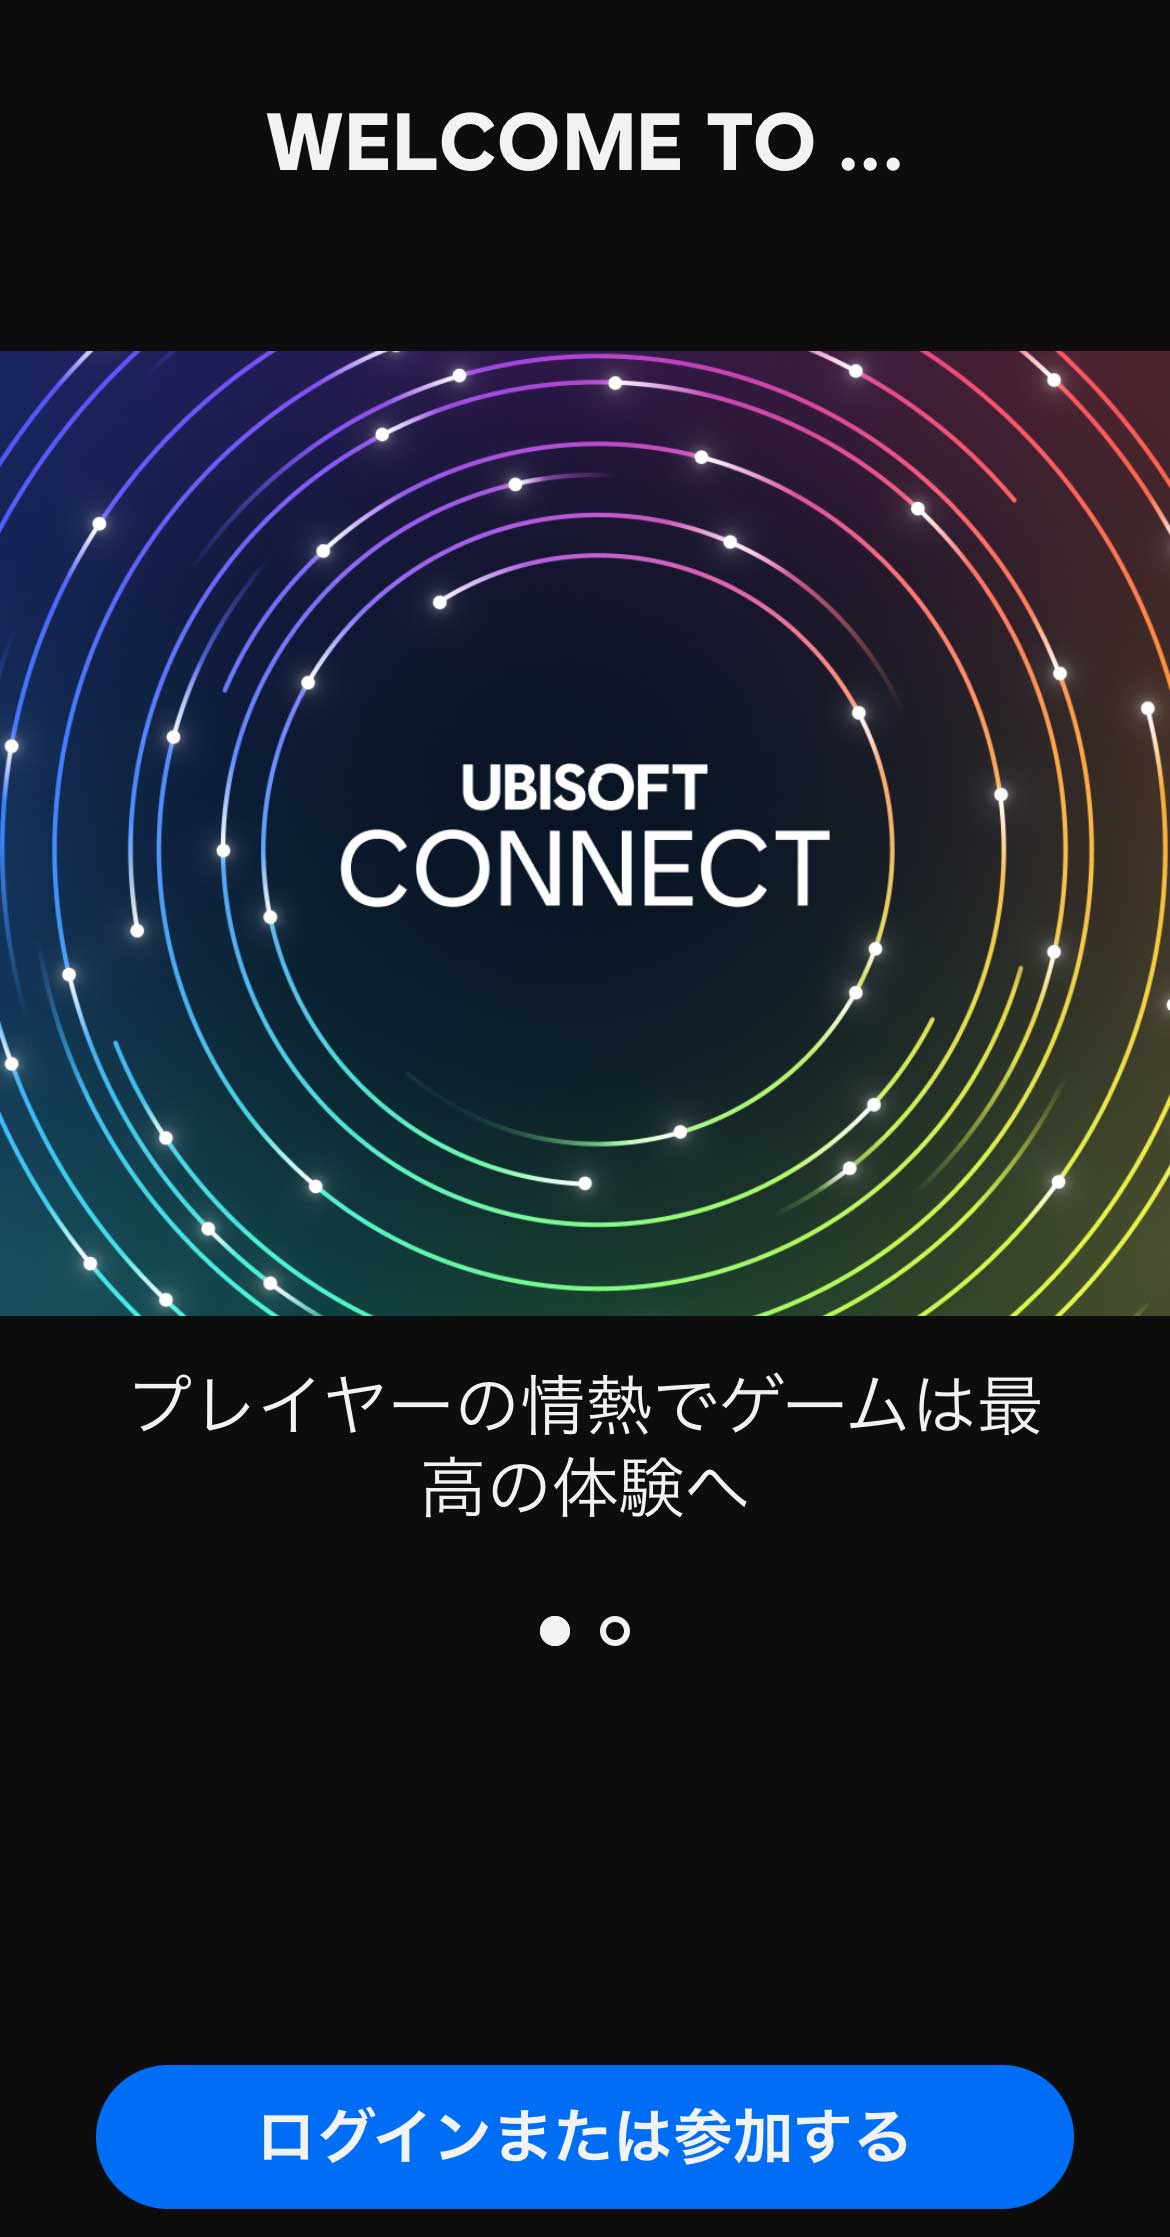 UBI CONNECT APP Welcome